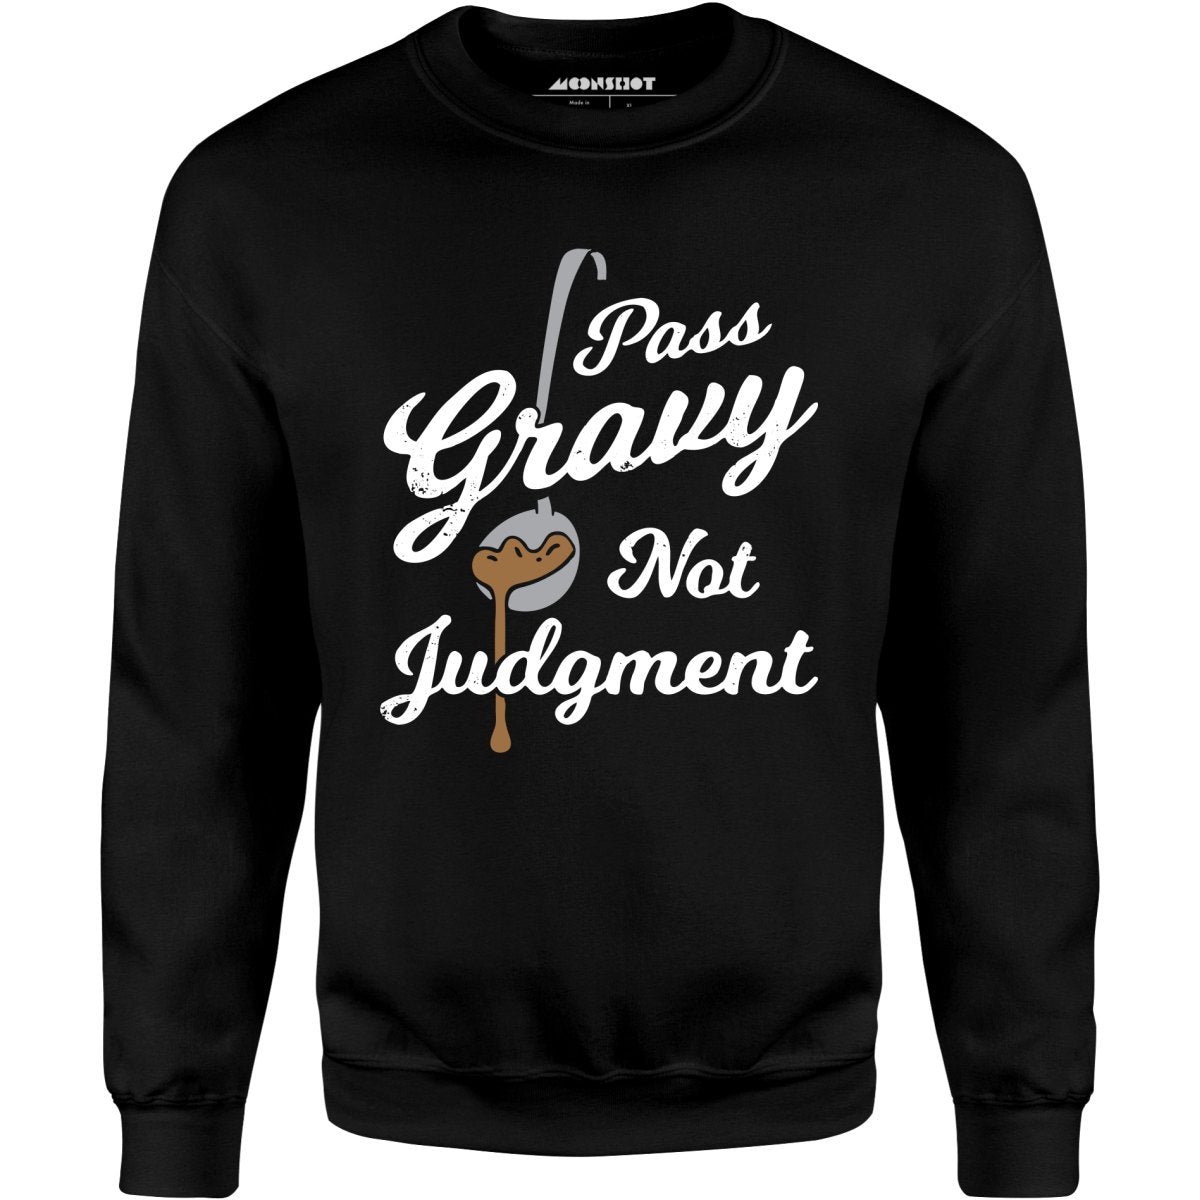 Pass Gravy Not Judgment - Unisex Sweatshirt